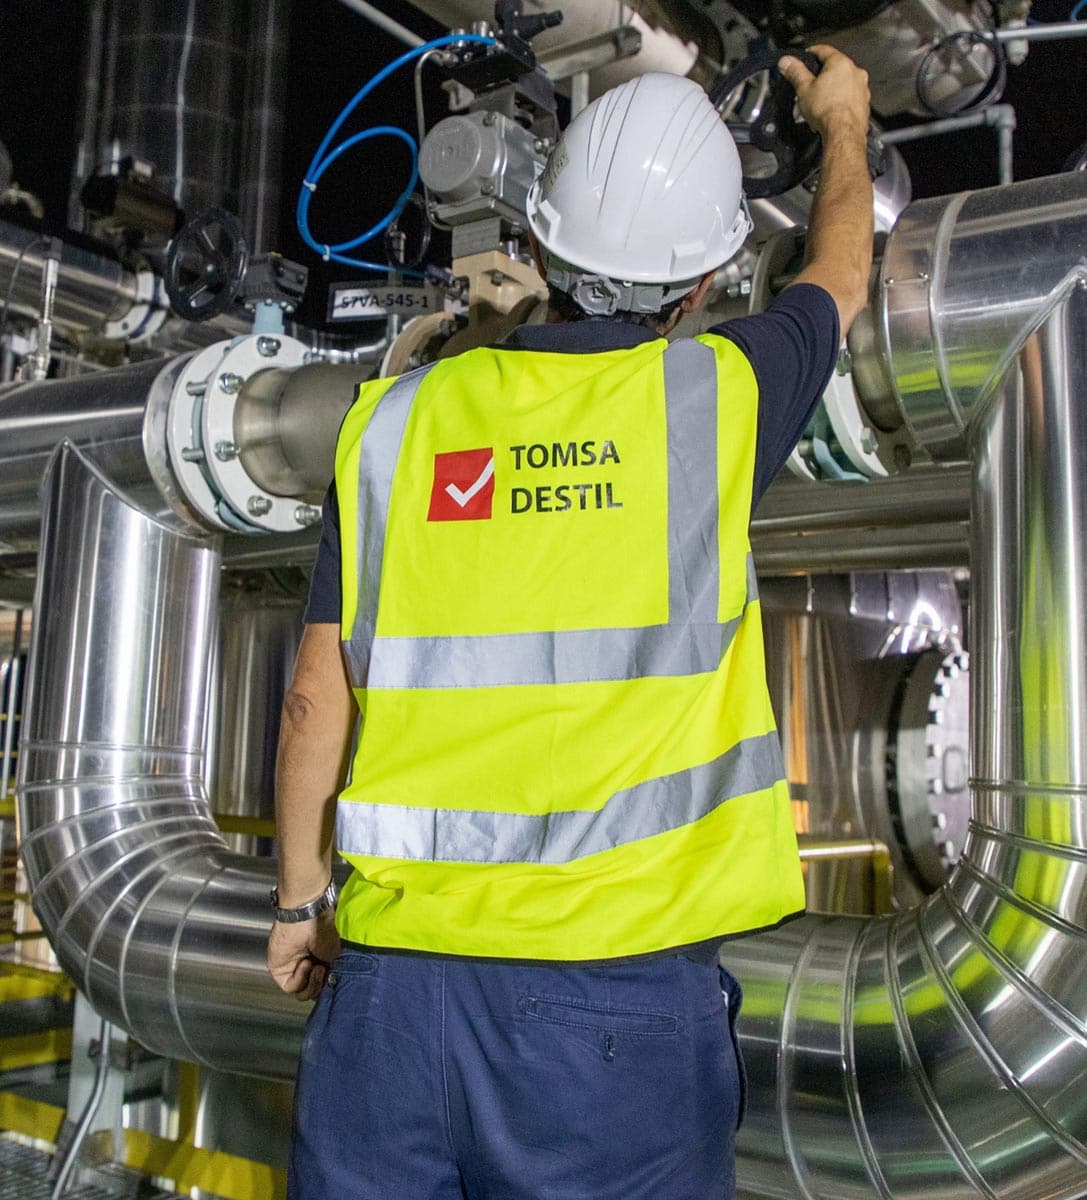 Tomsa Destil worker preparing ClearAlc dealcoholization technology